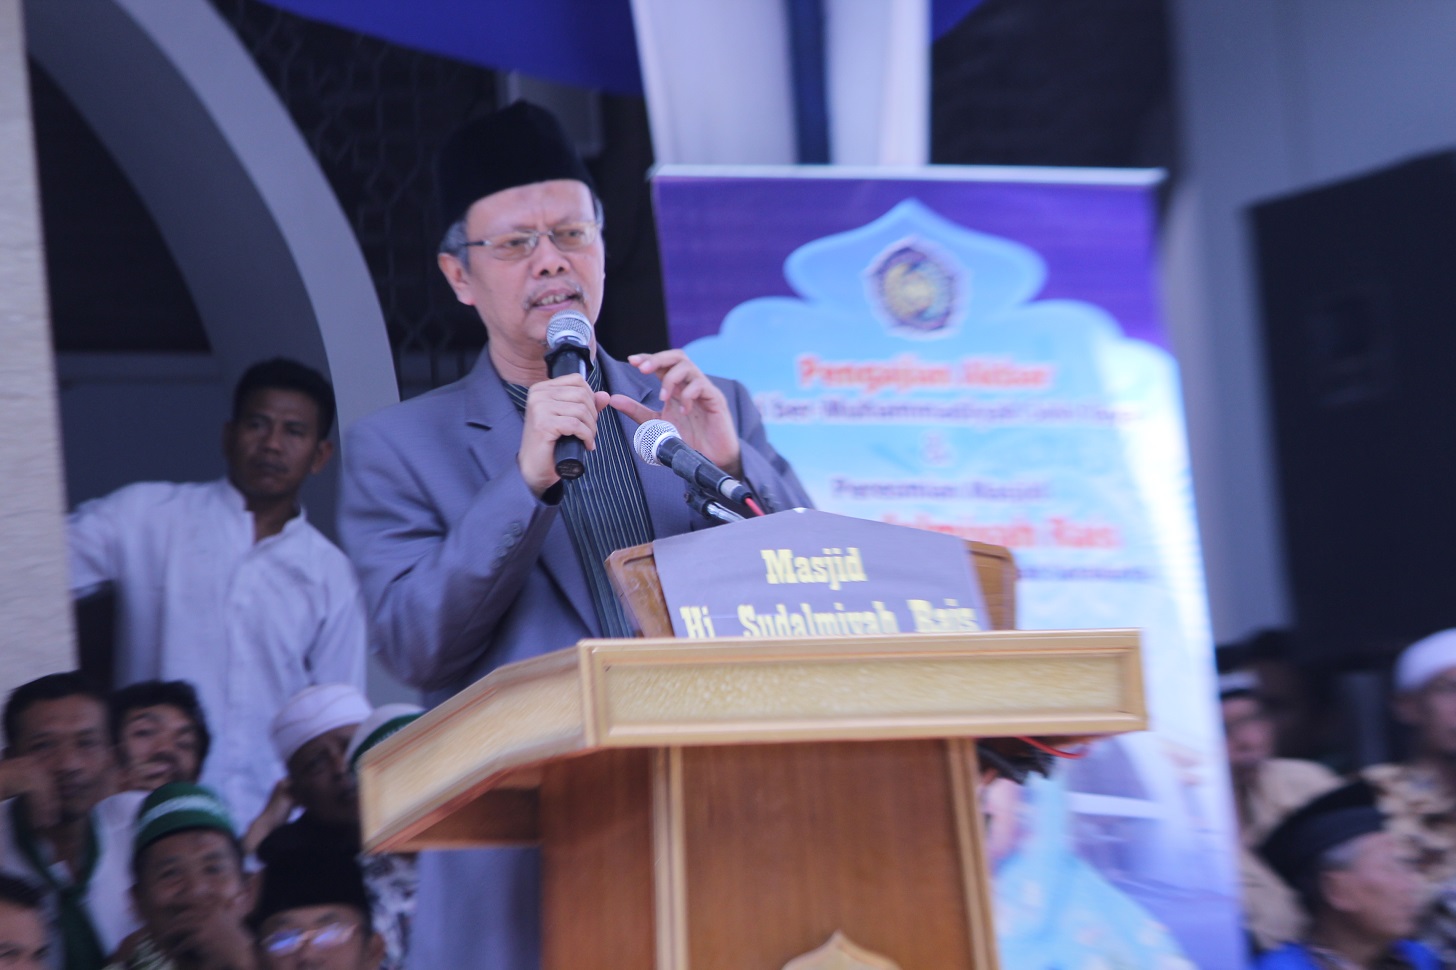 PIDATO: Yunahar Ilyas pada acara Peresmian Masjid Kampus UMS Hj Sudalmiyah Rais, Jogjakarta, Ahad (3/12/2017). (foto: ist)